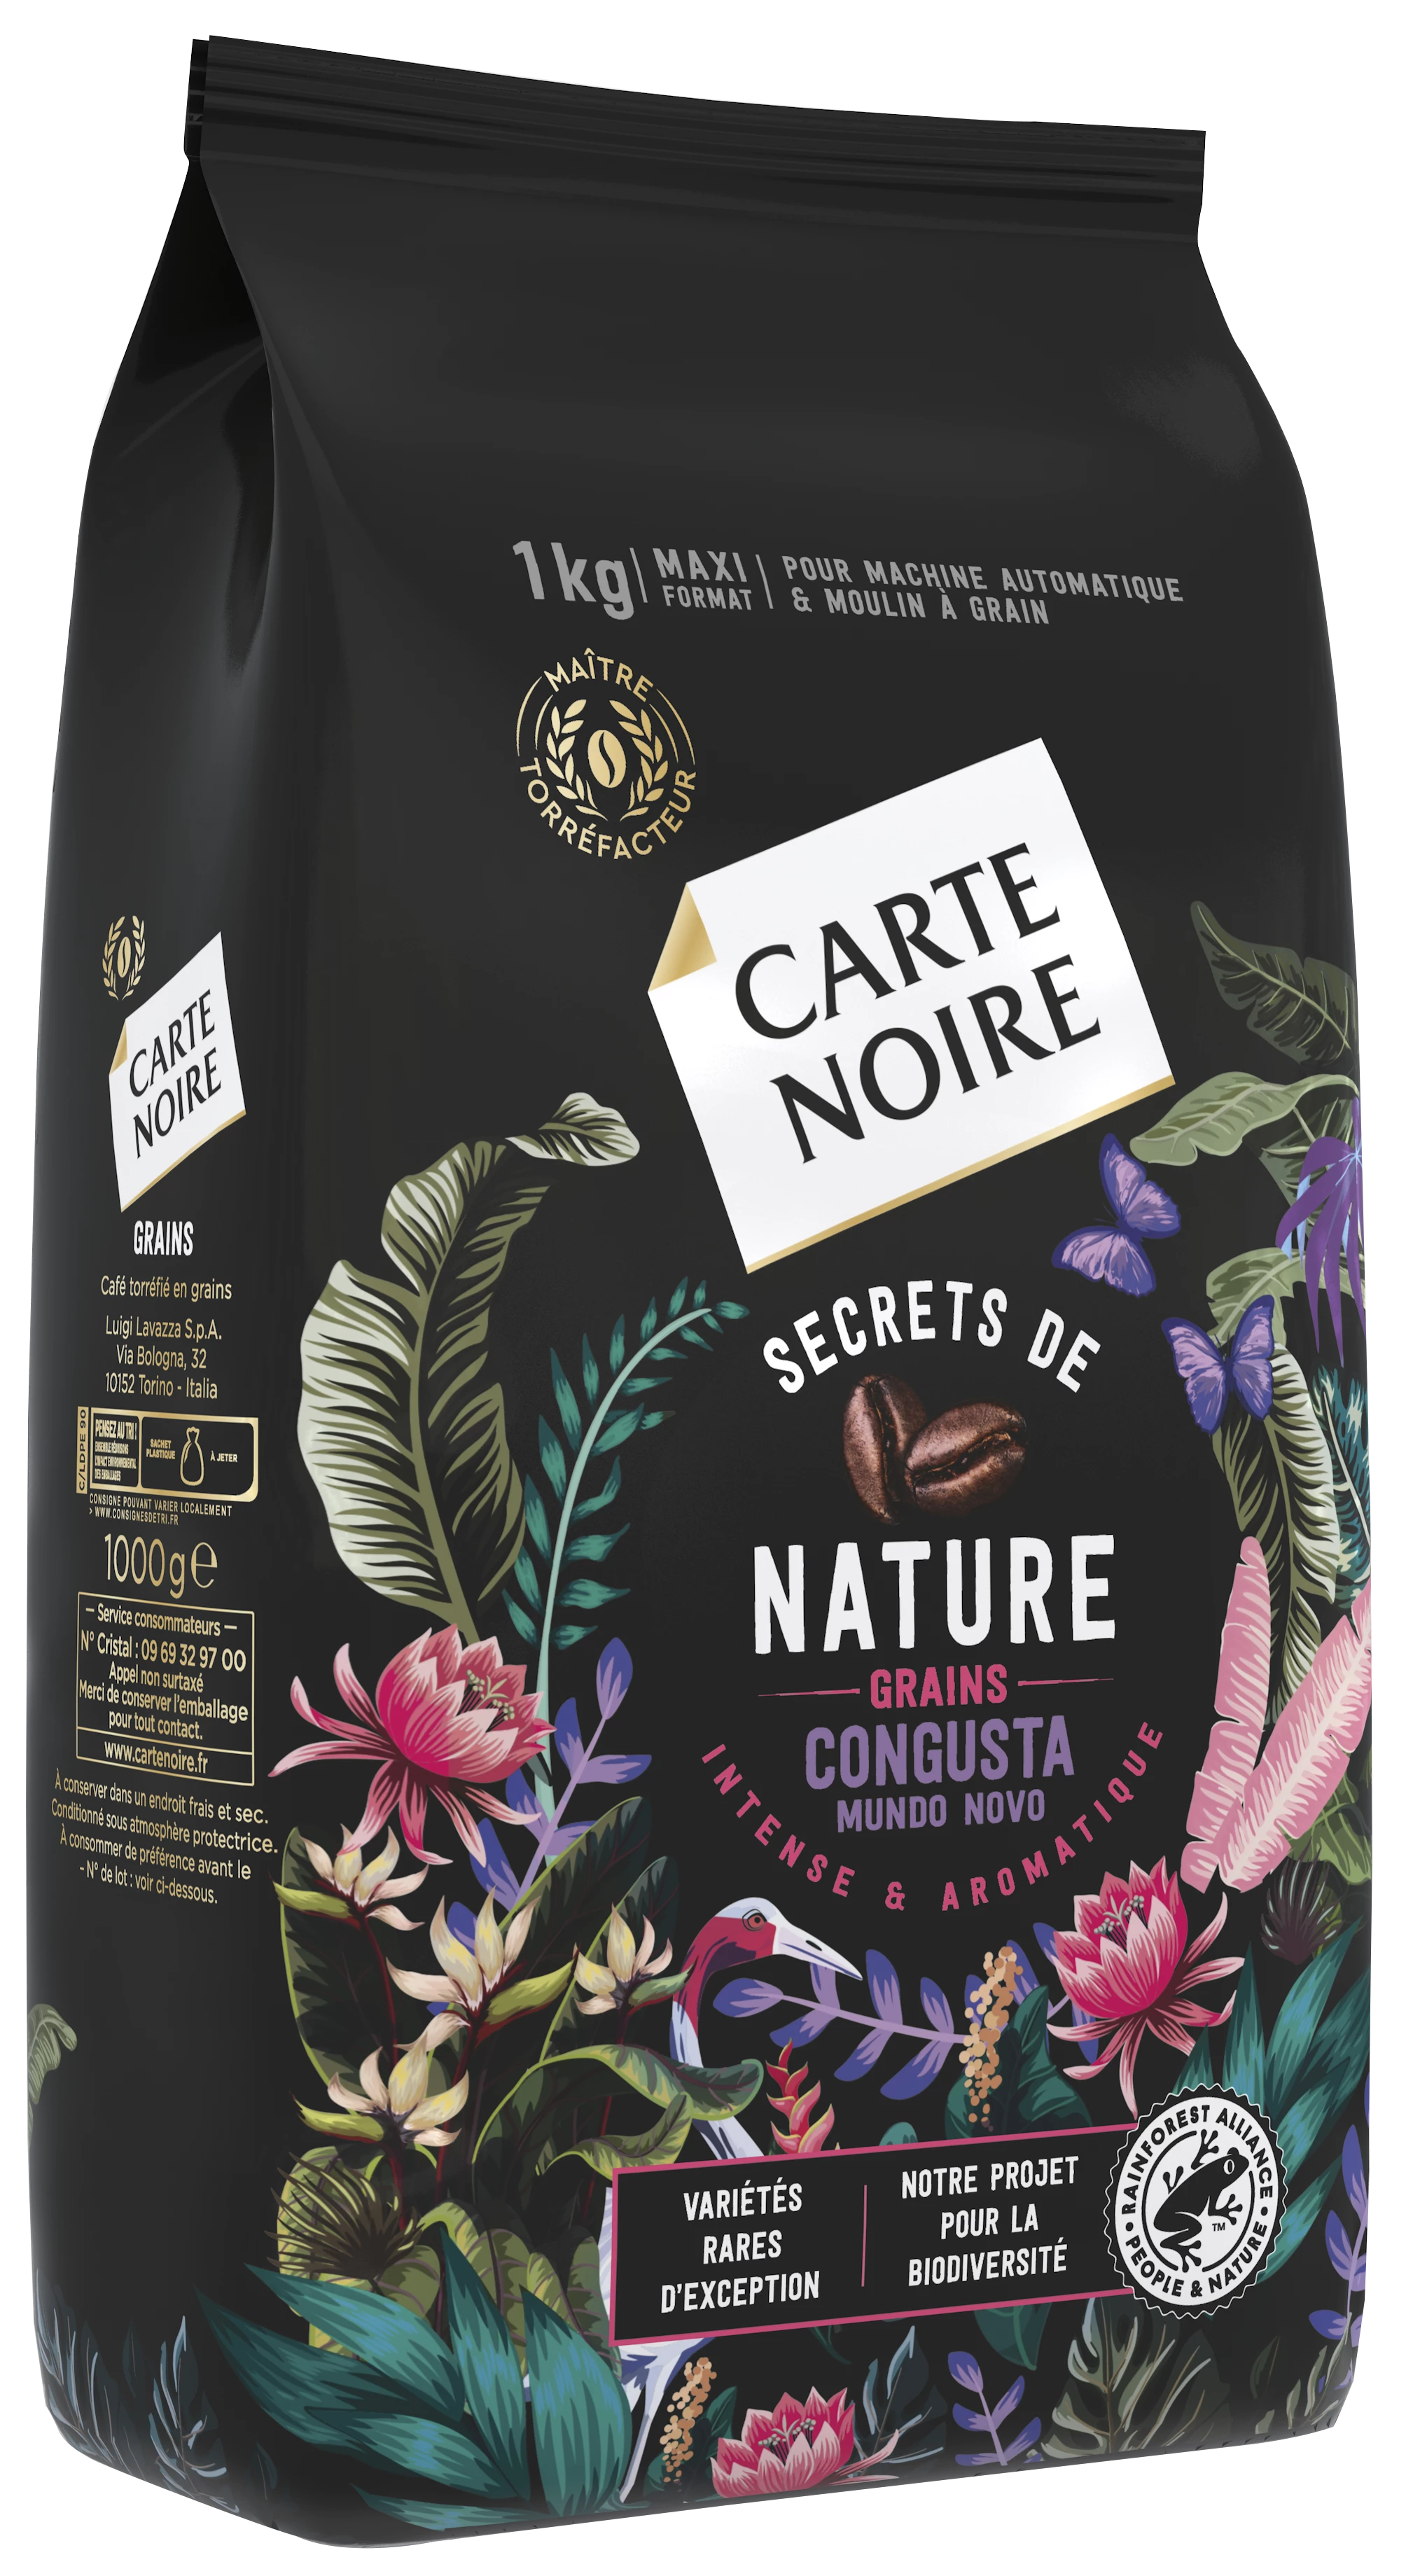 Congusta 強烈で香り豊かなコーヒー豆。 1kg袋 - CARTE NOIRE